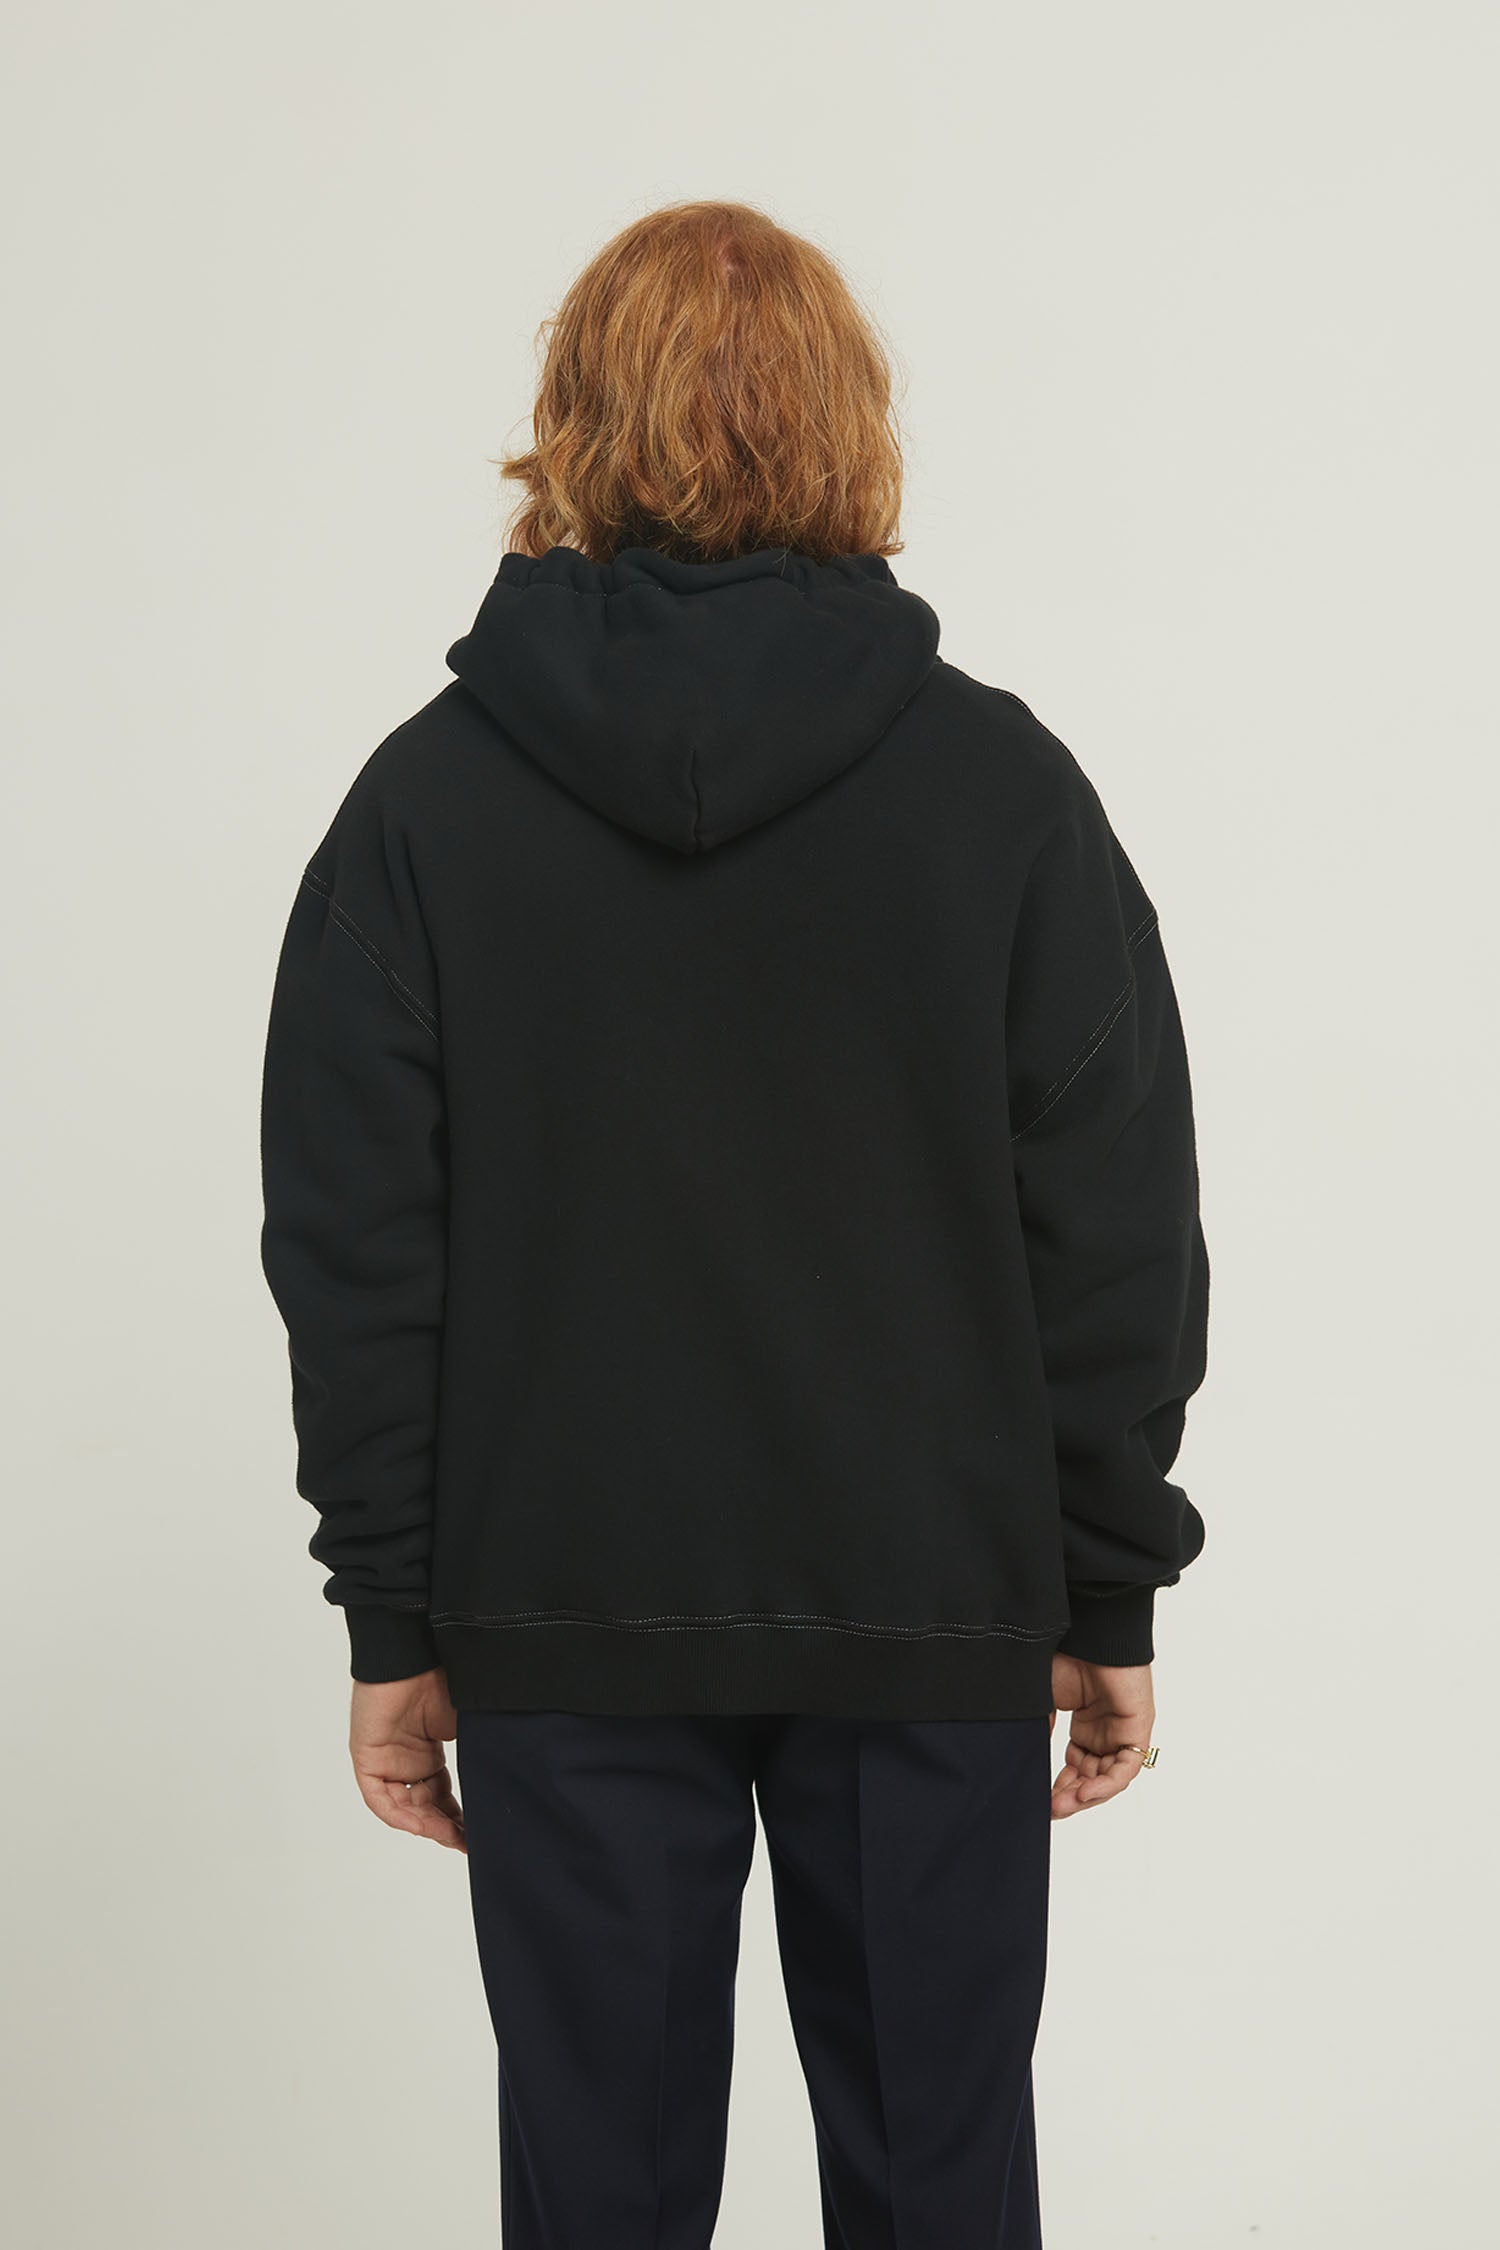 Sweat 100% coton "Dawn Patrol" hoodie - Black 